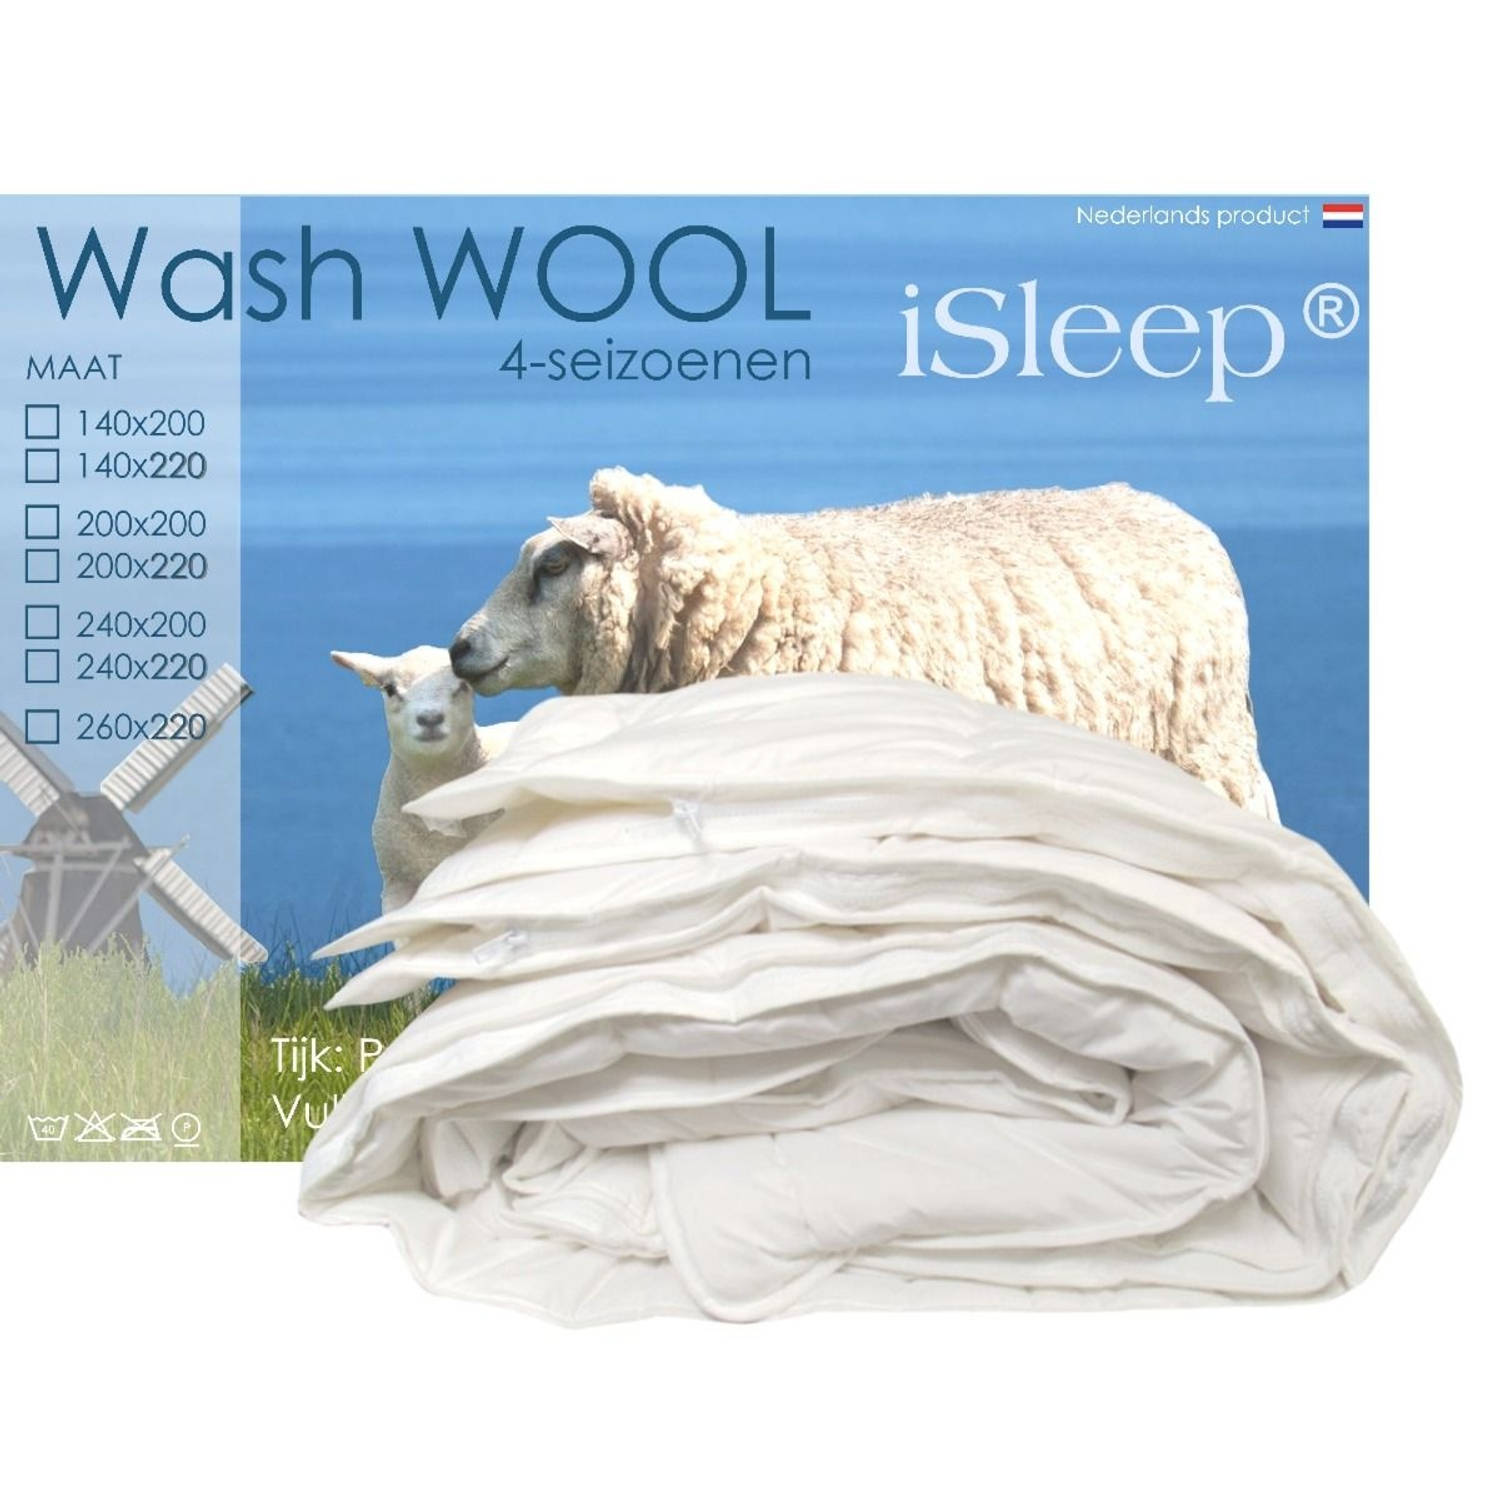 iSleep Wash Wool wollen 4-seizoenen dekbed wasbare wol 2-Persoons 200x200 cm